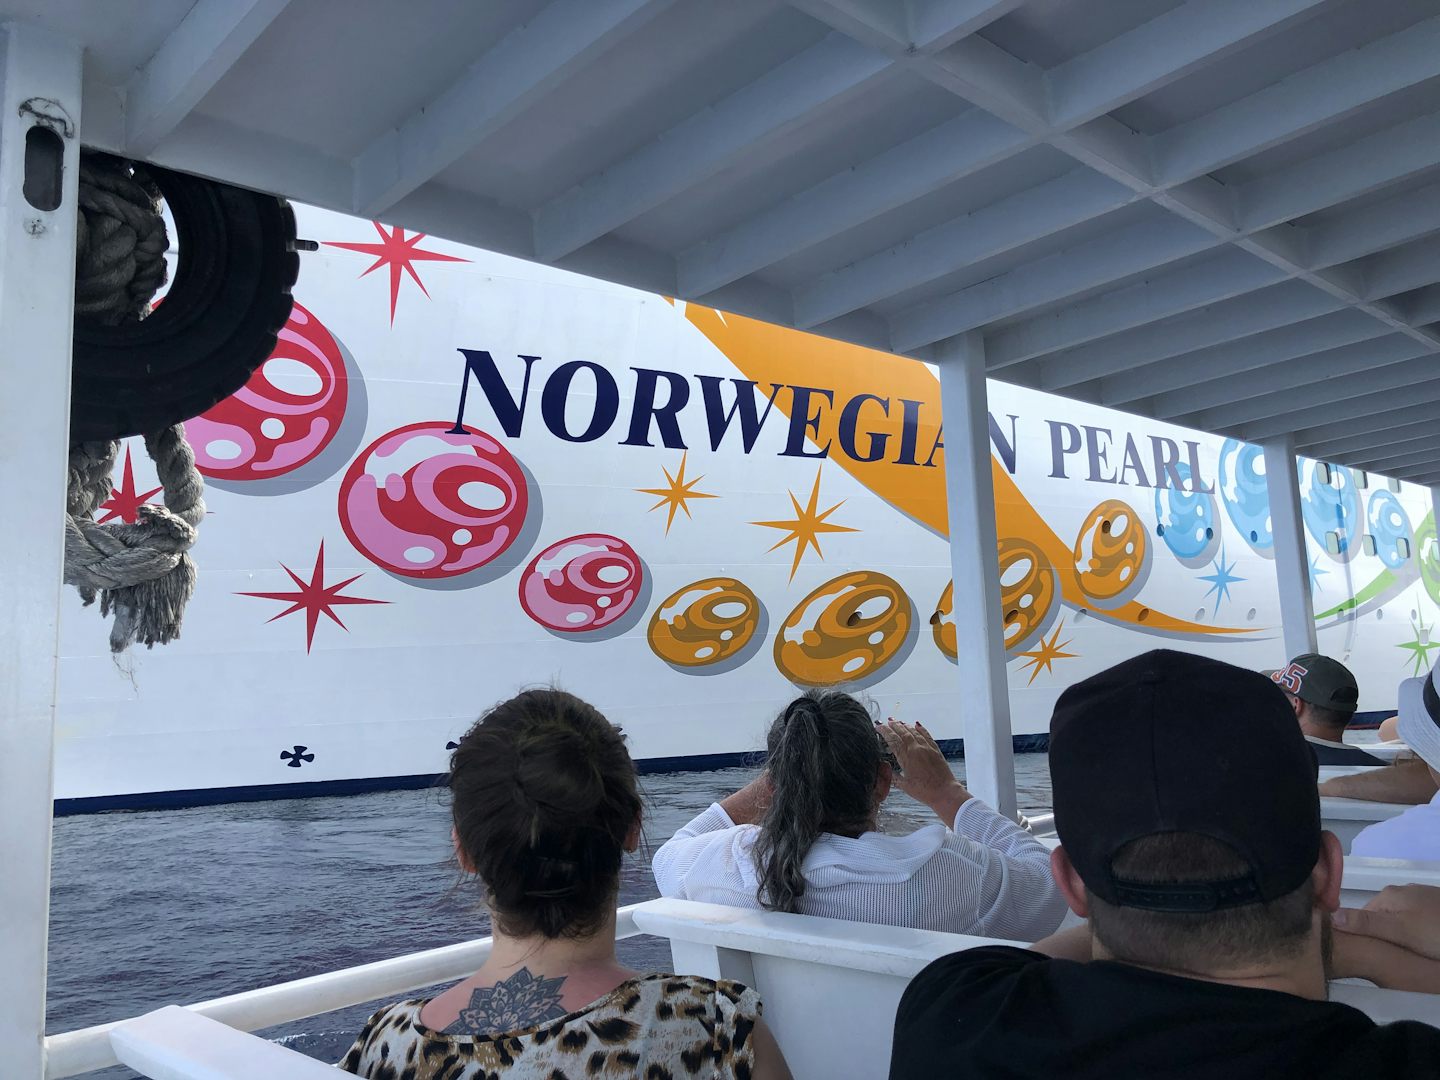 The Norwegian Pearl in Grand Cayman